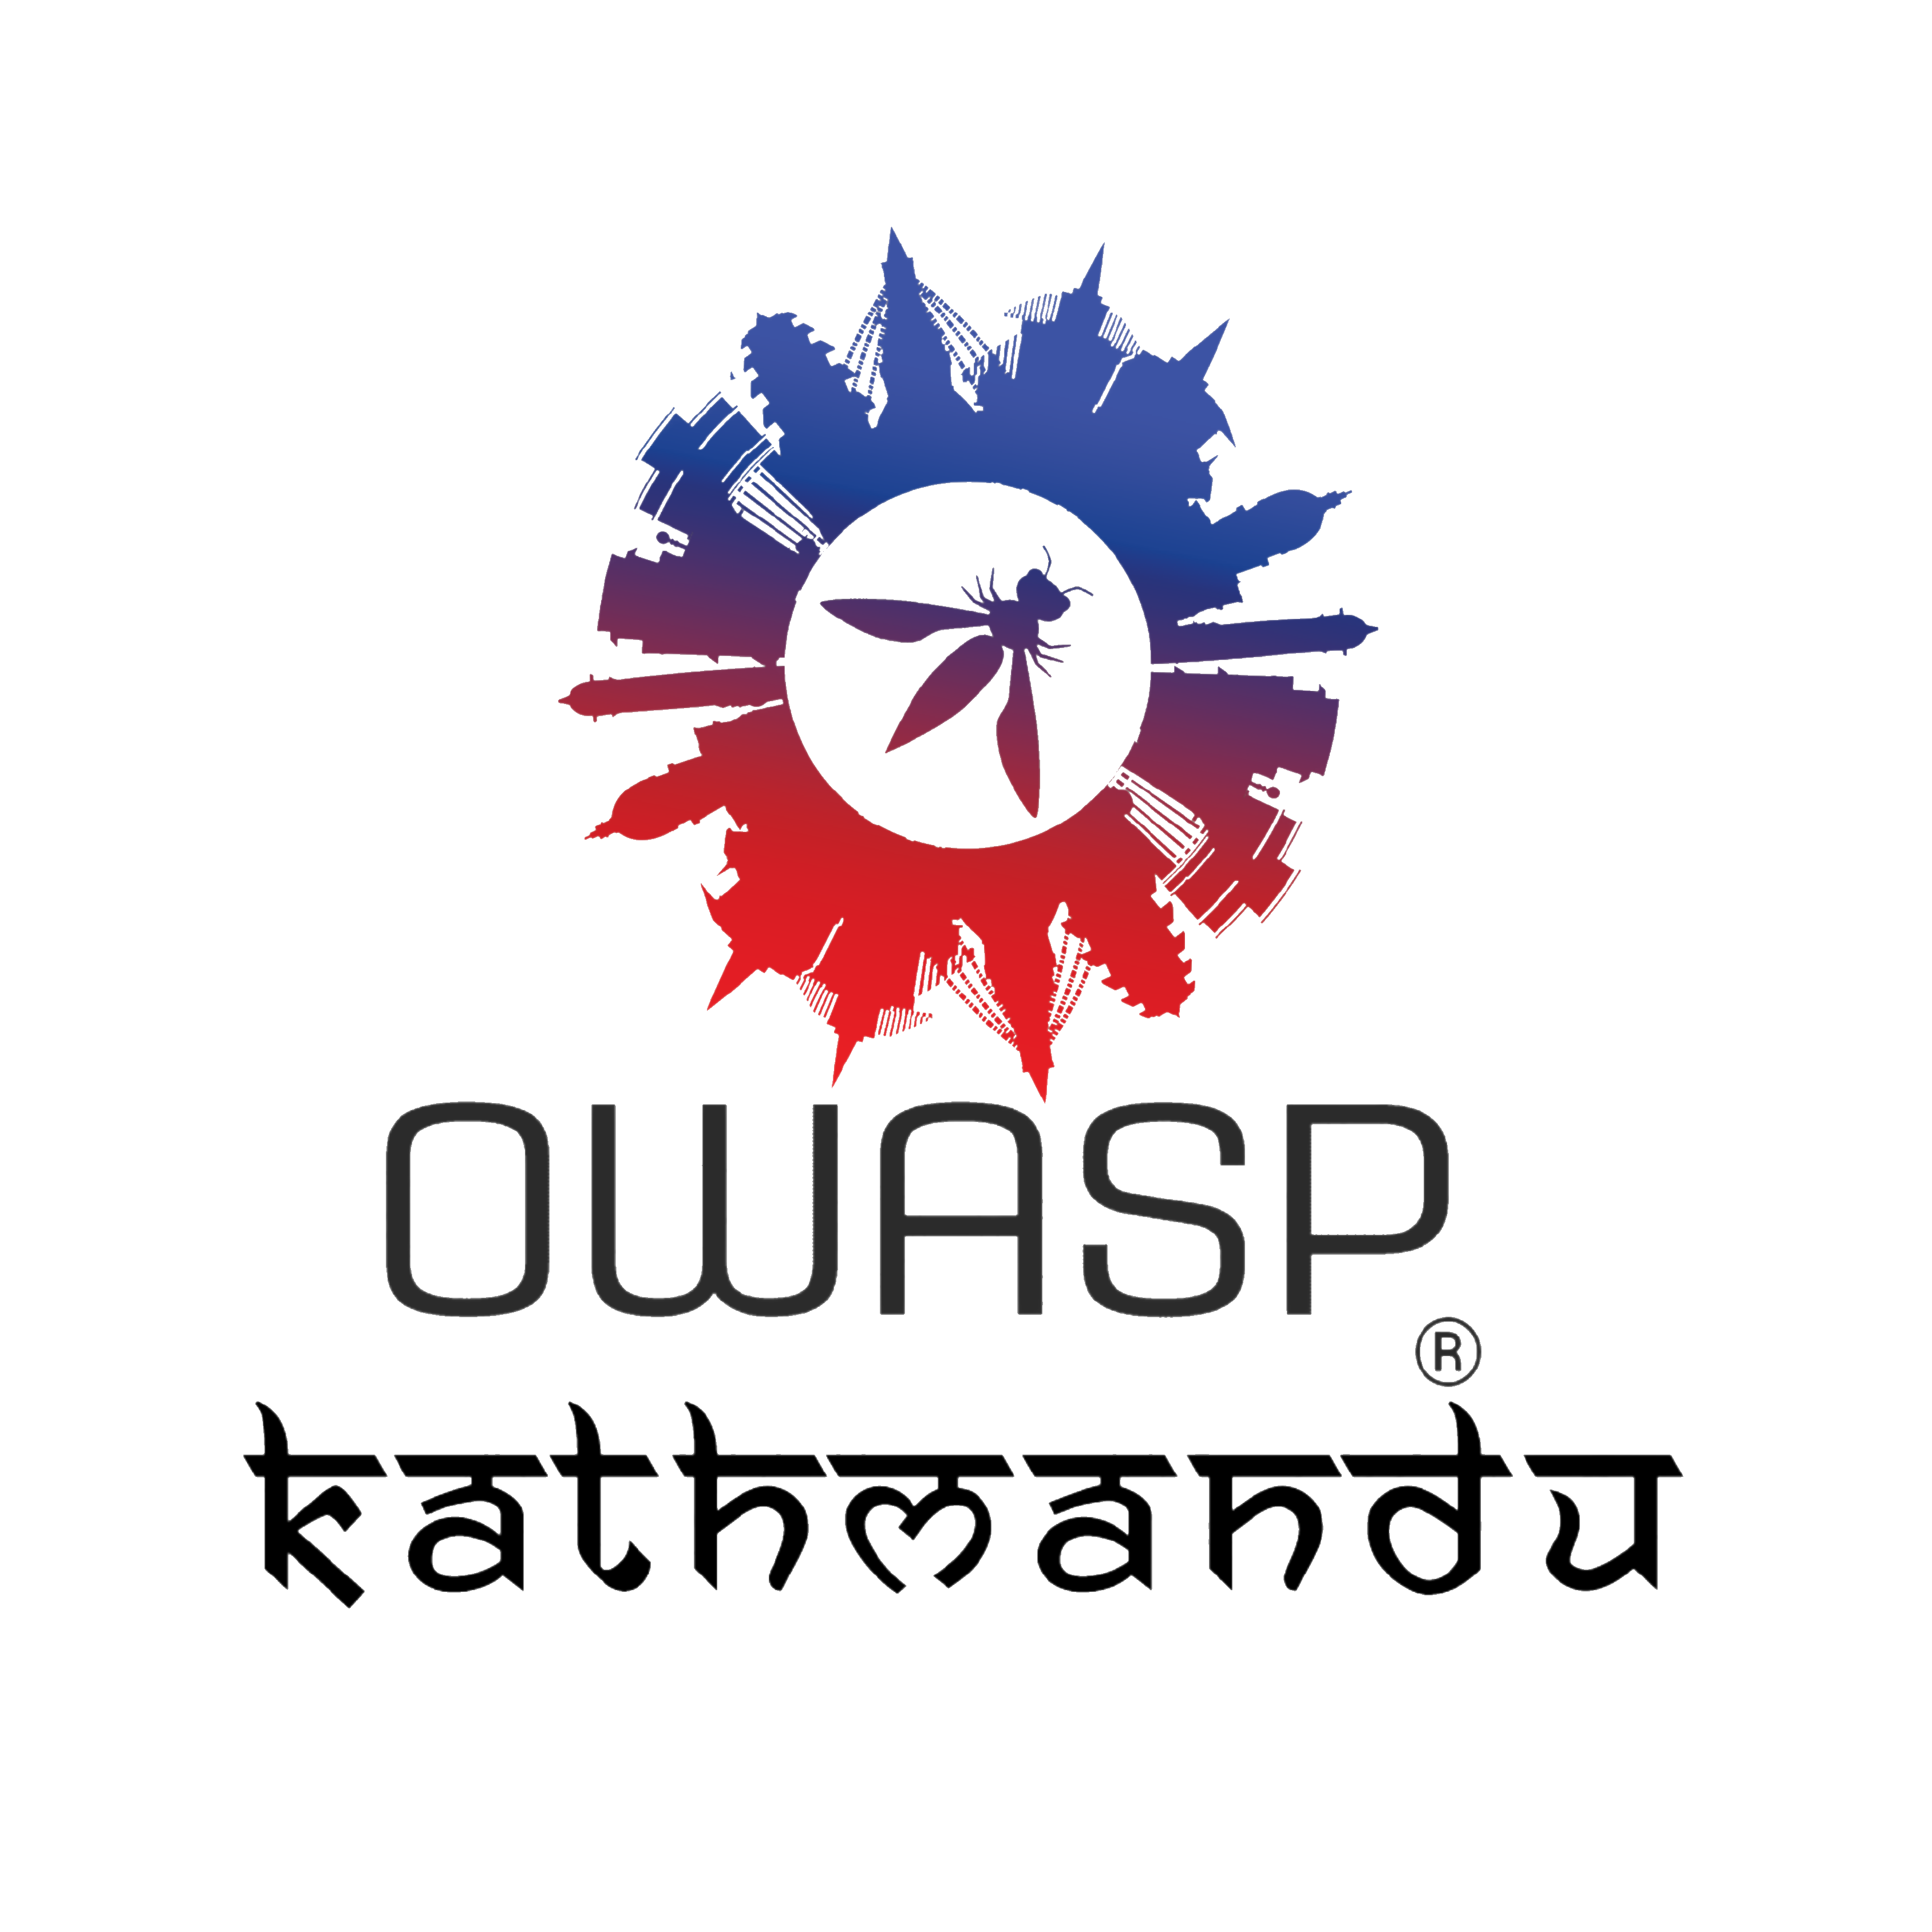 OWASP Kathmandu